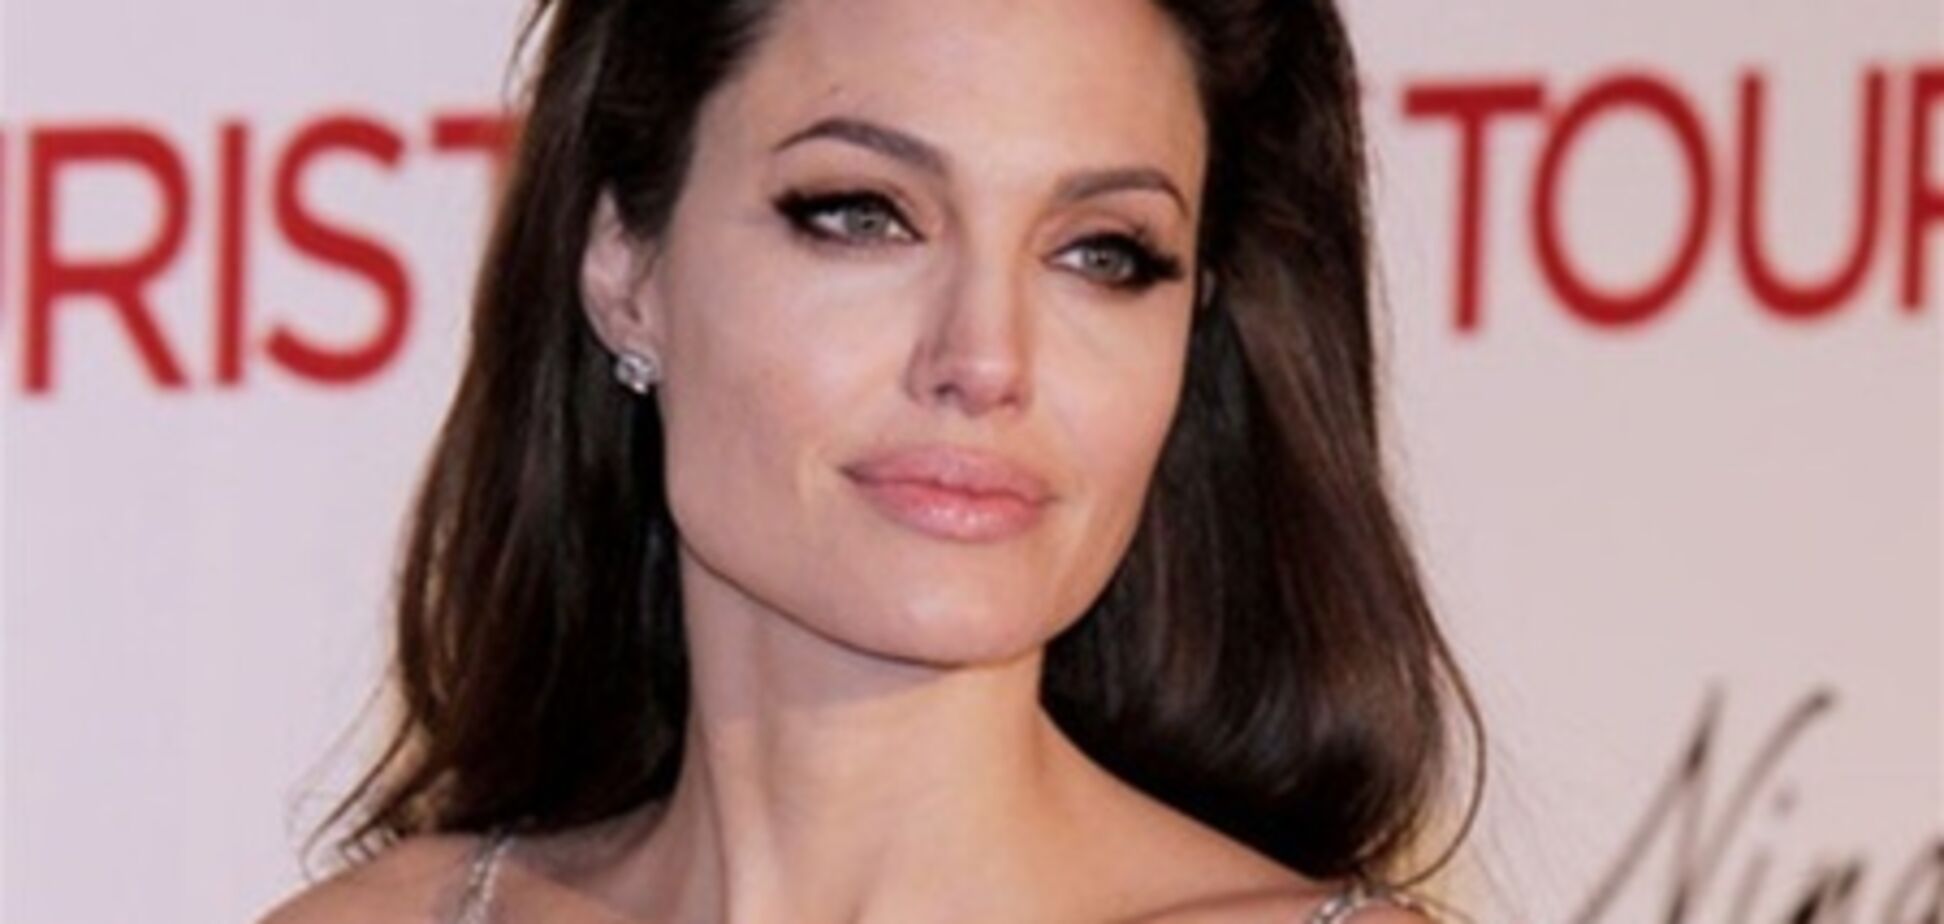 Джоли удалила обе груди из-за страха мастопатии 